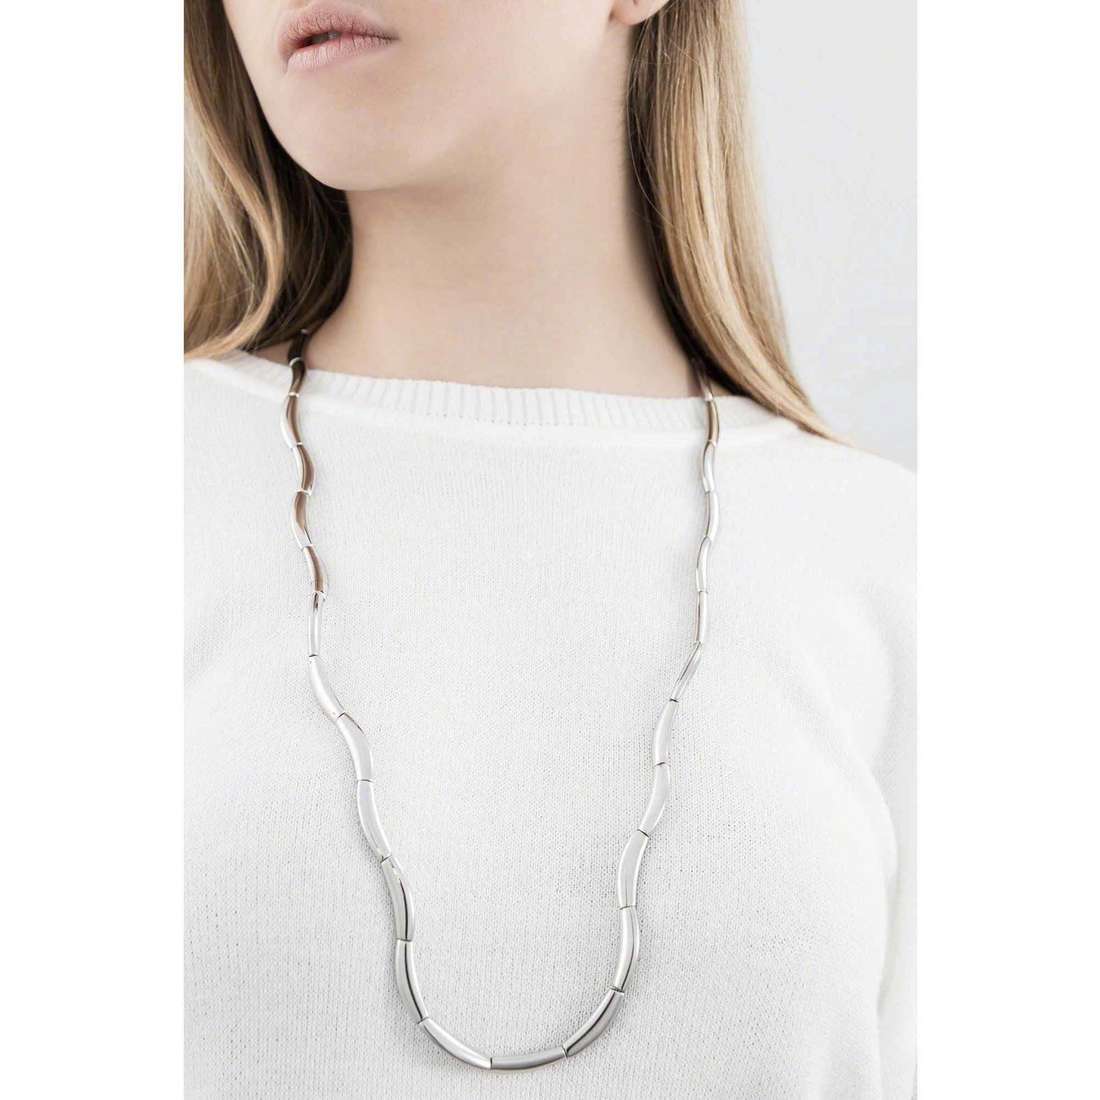 Breil necklaces Flowing woman TJ1094 wearing